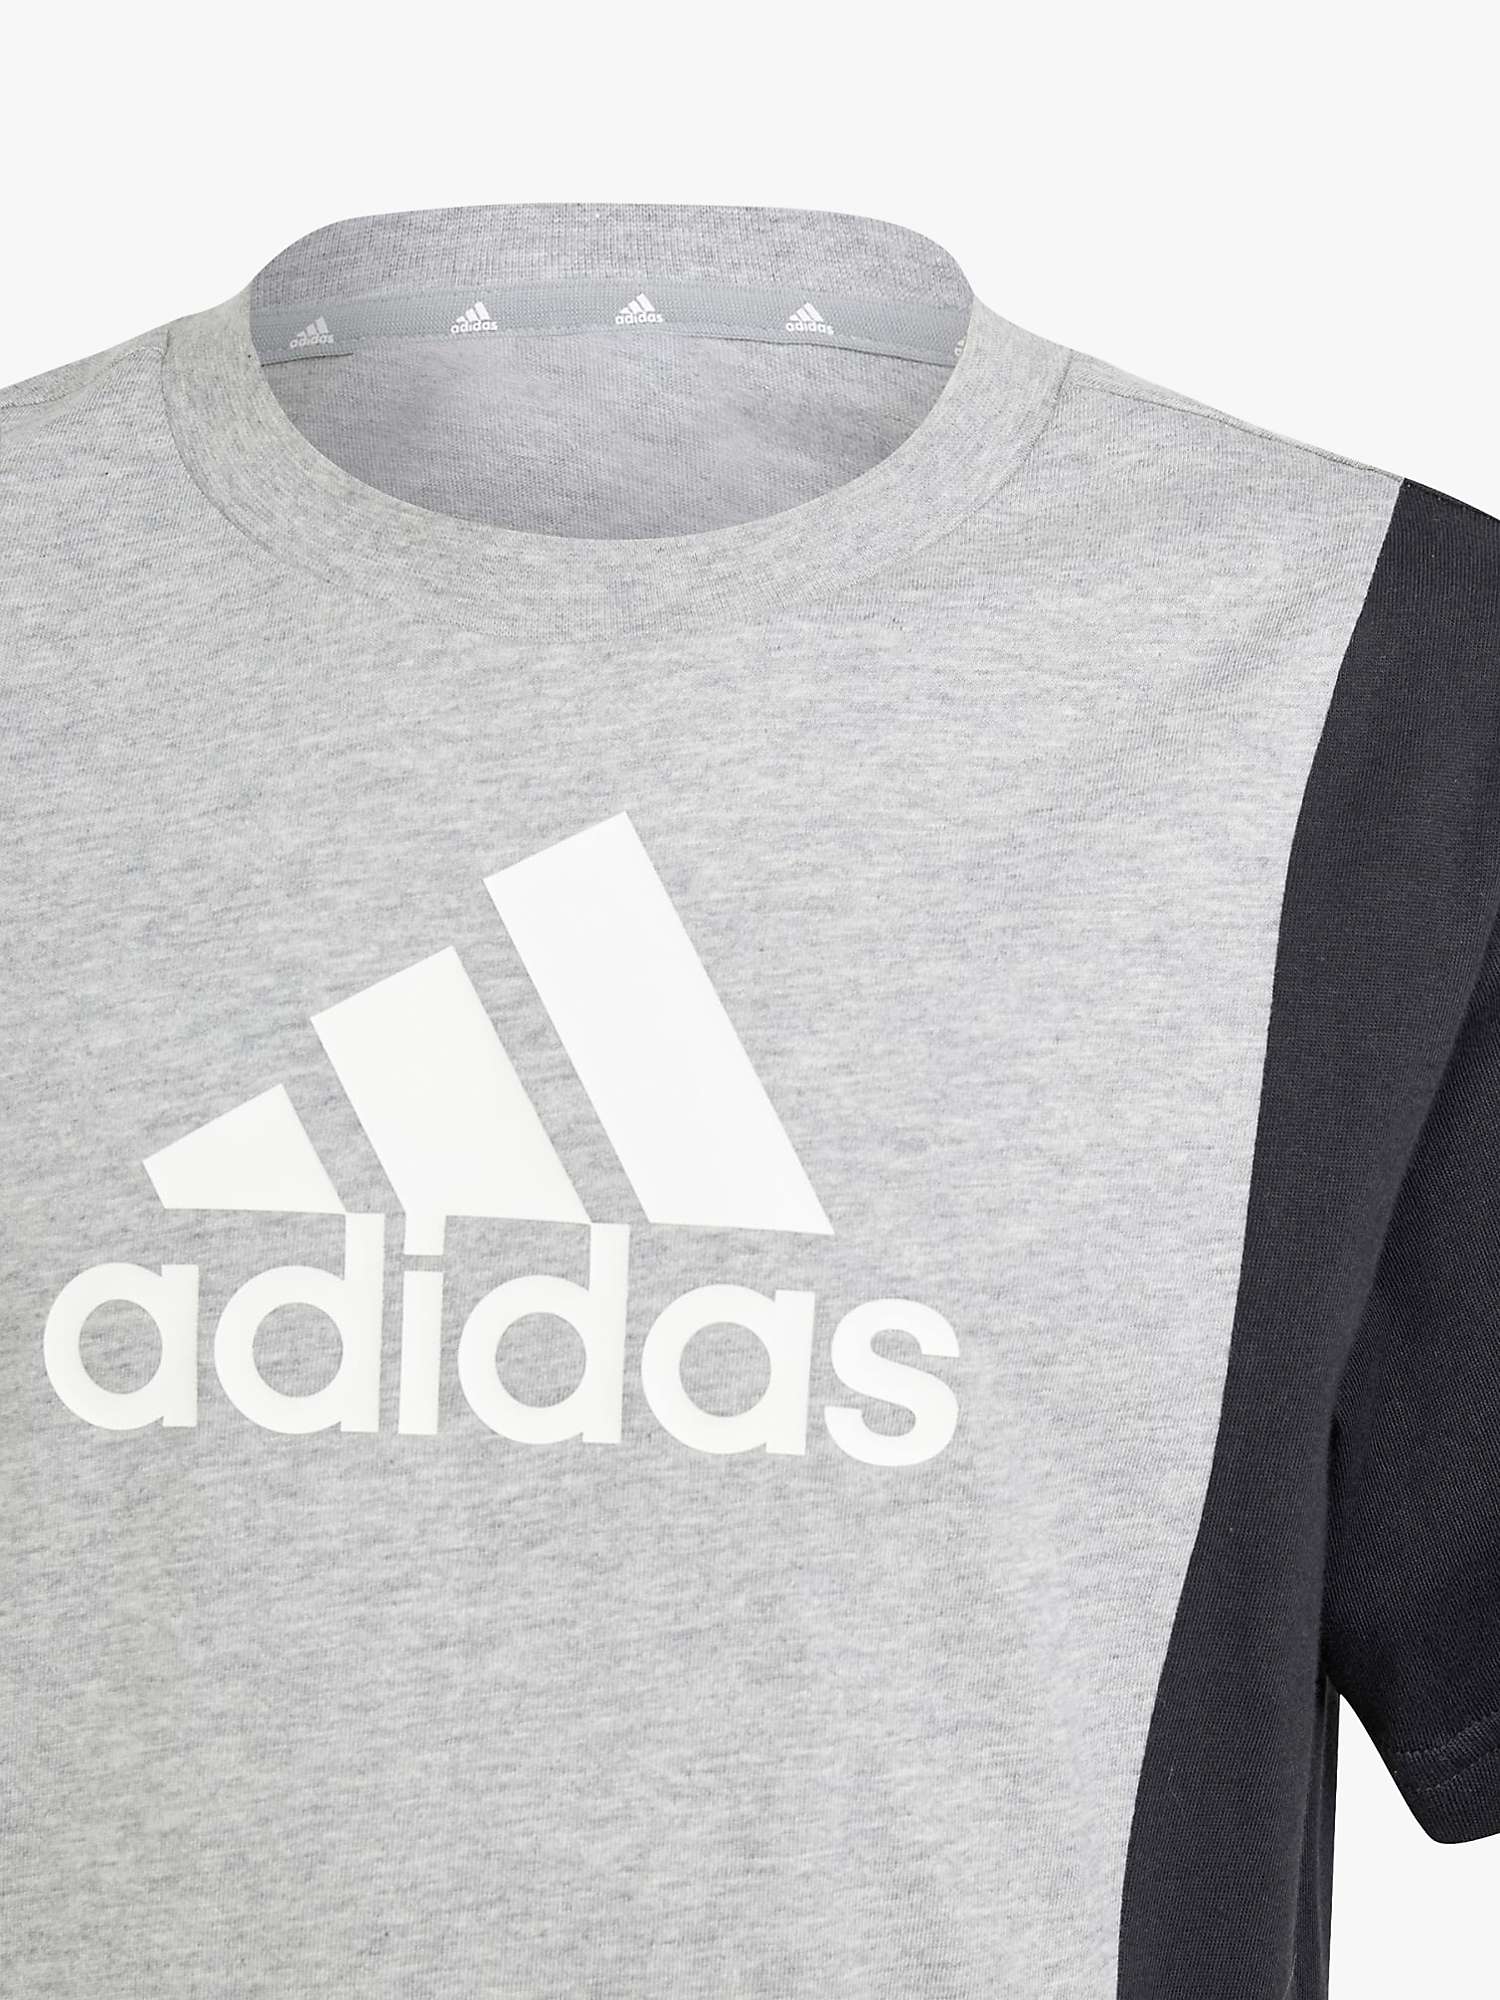 Buy adidas Kids' Essentials AEROREADY Logo Colour Block T-Shirt & Shorts Set, Grey Online at johnlewis.com